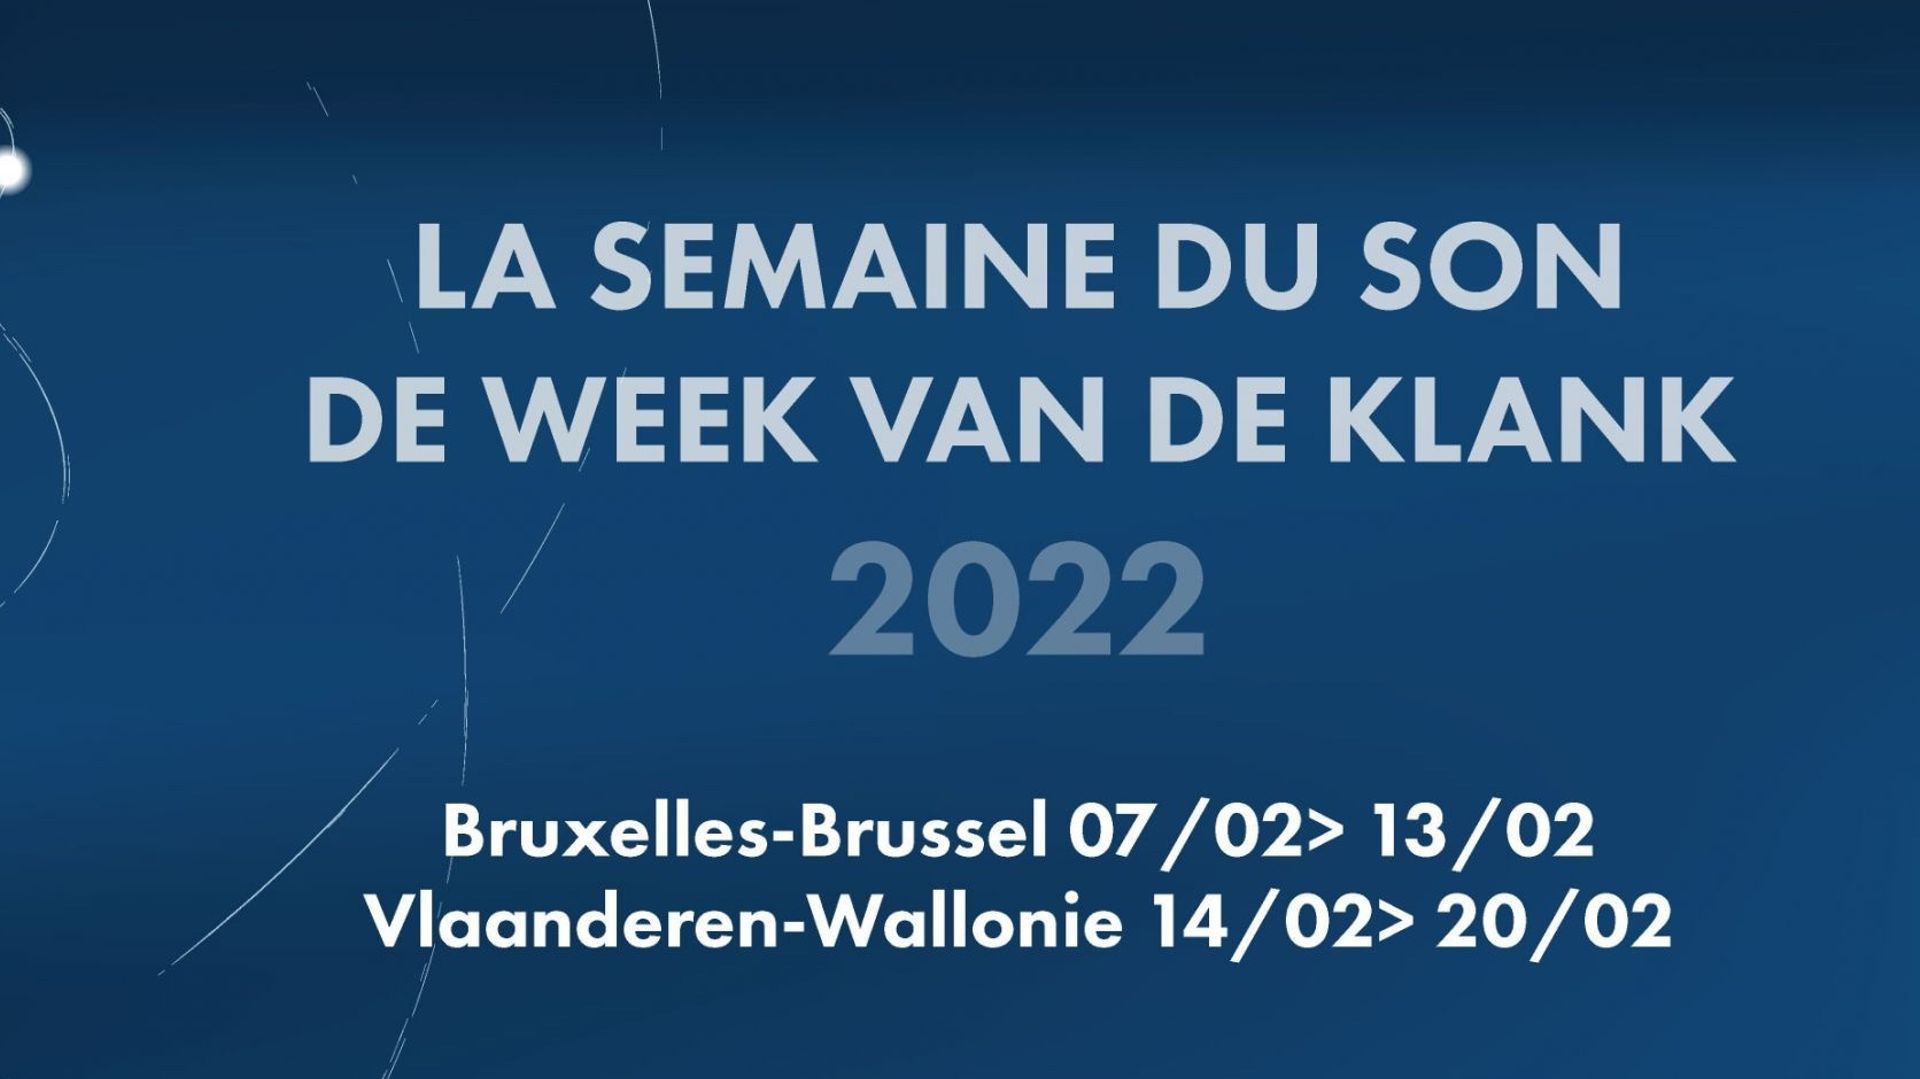 La semaine du son en Wallonie et en Flandre